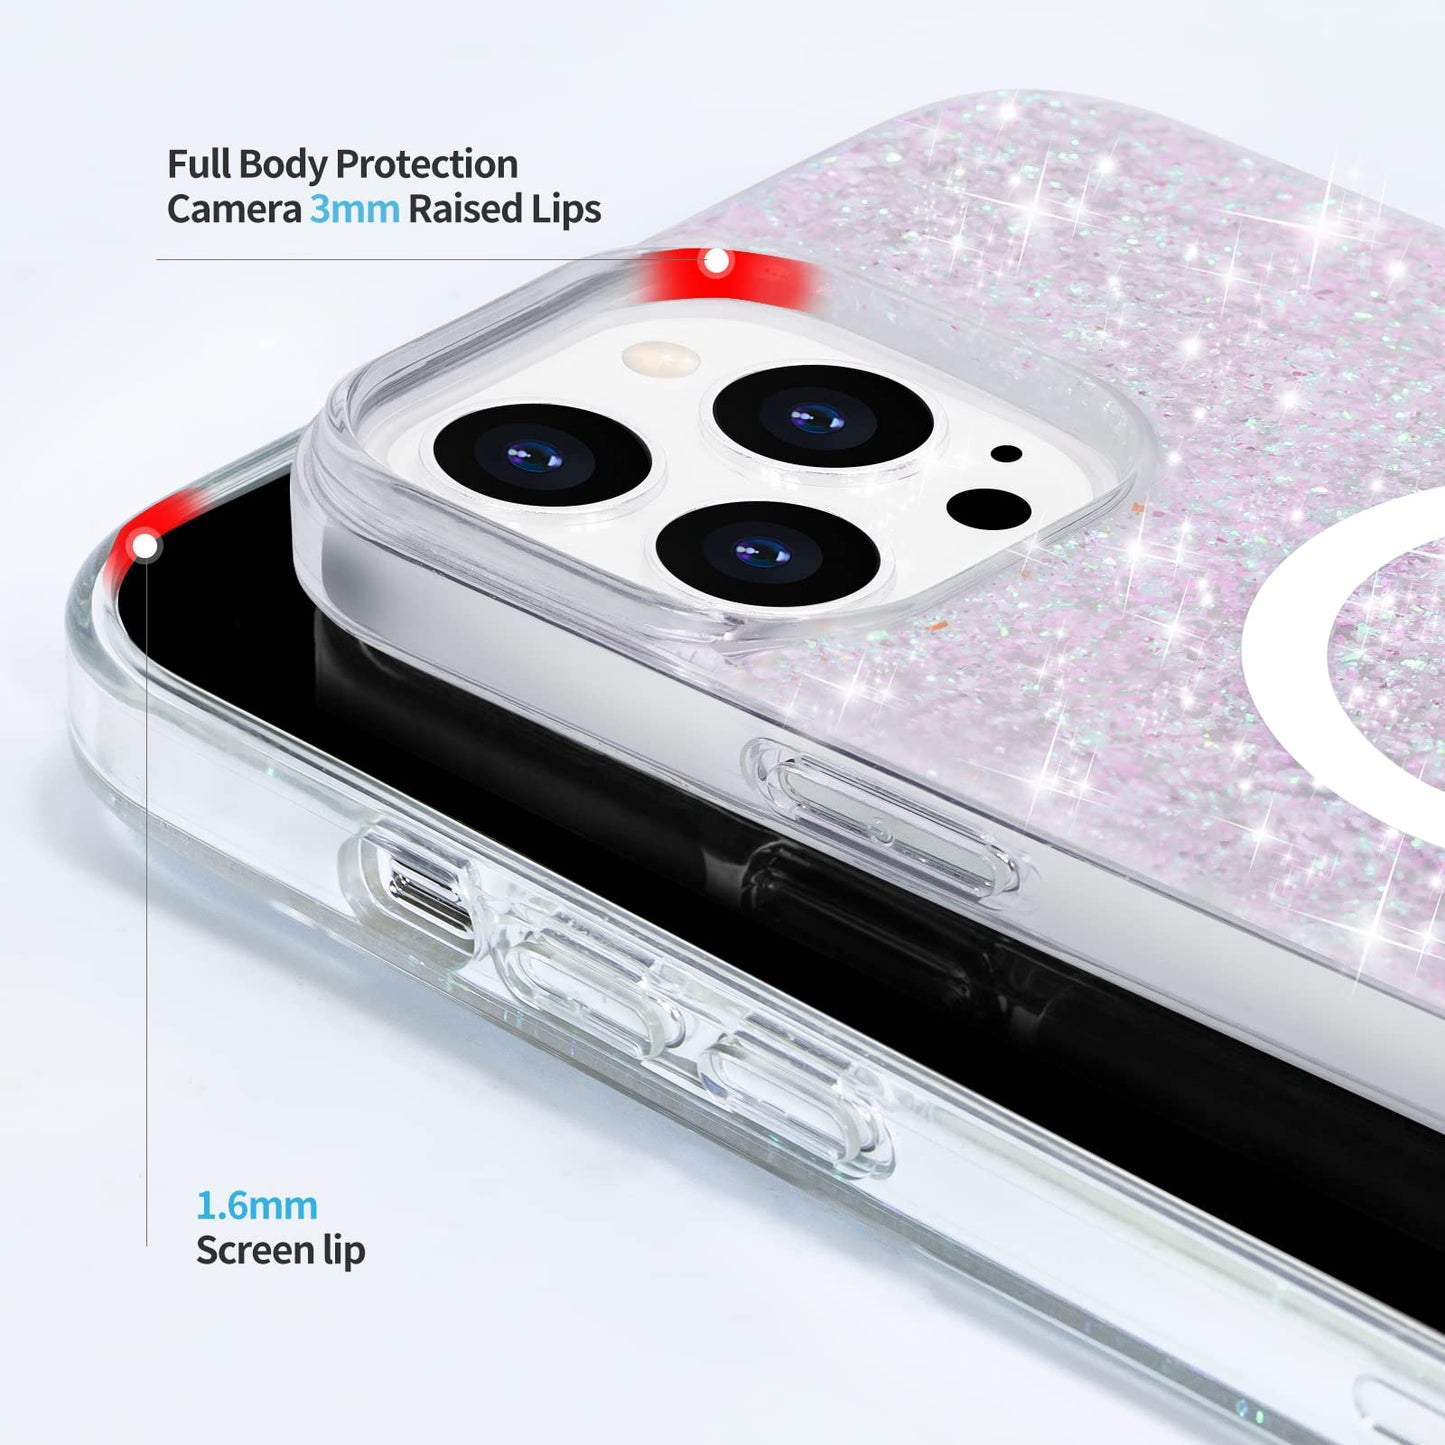 Nebula™ Magic Glitter Magsafe Pink - iPhone Cases